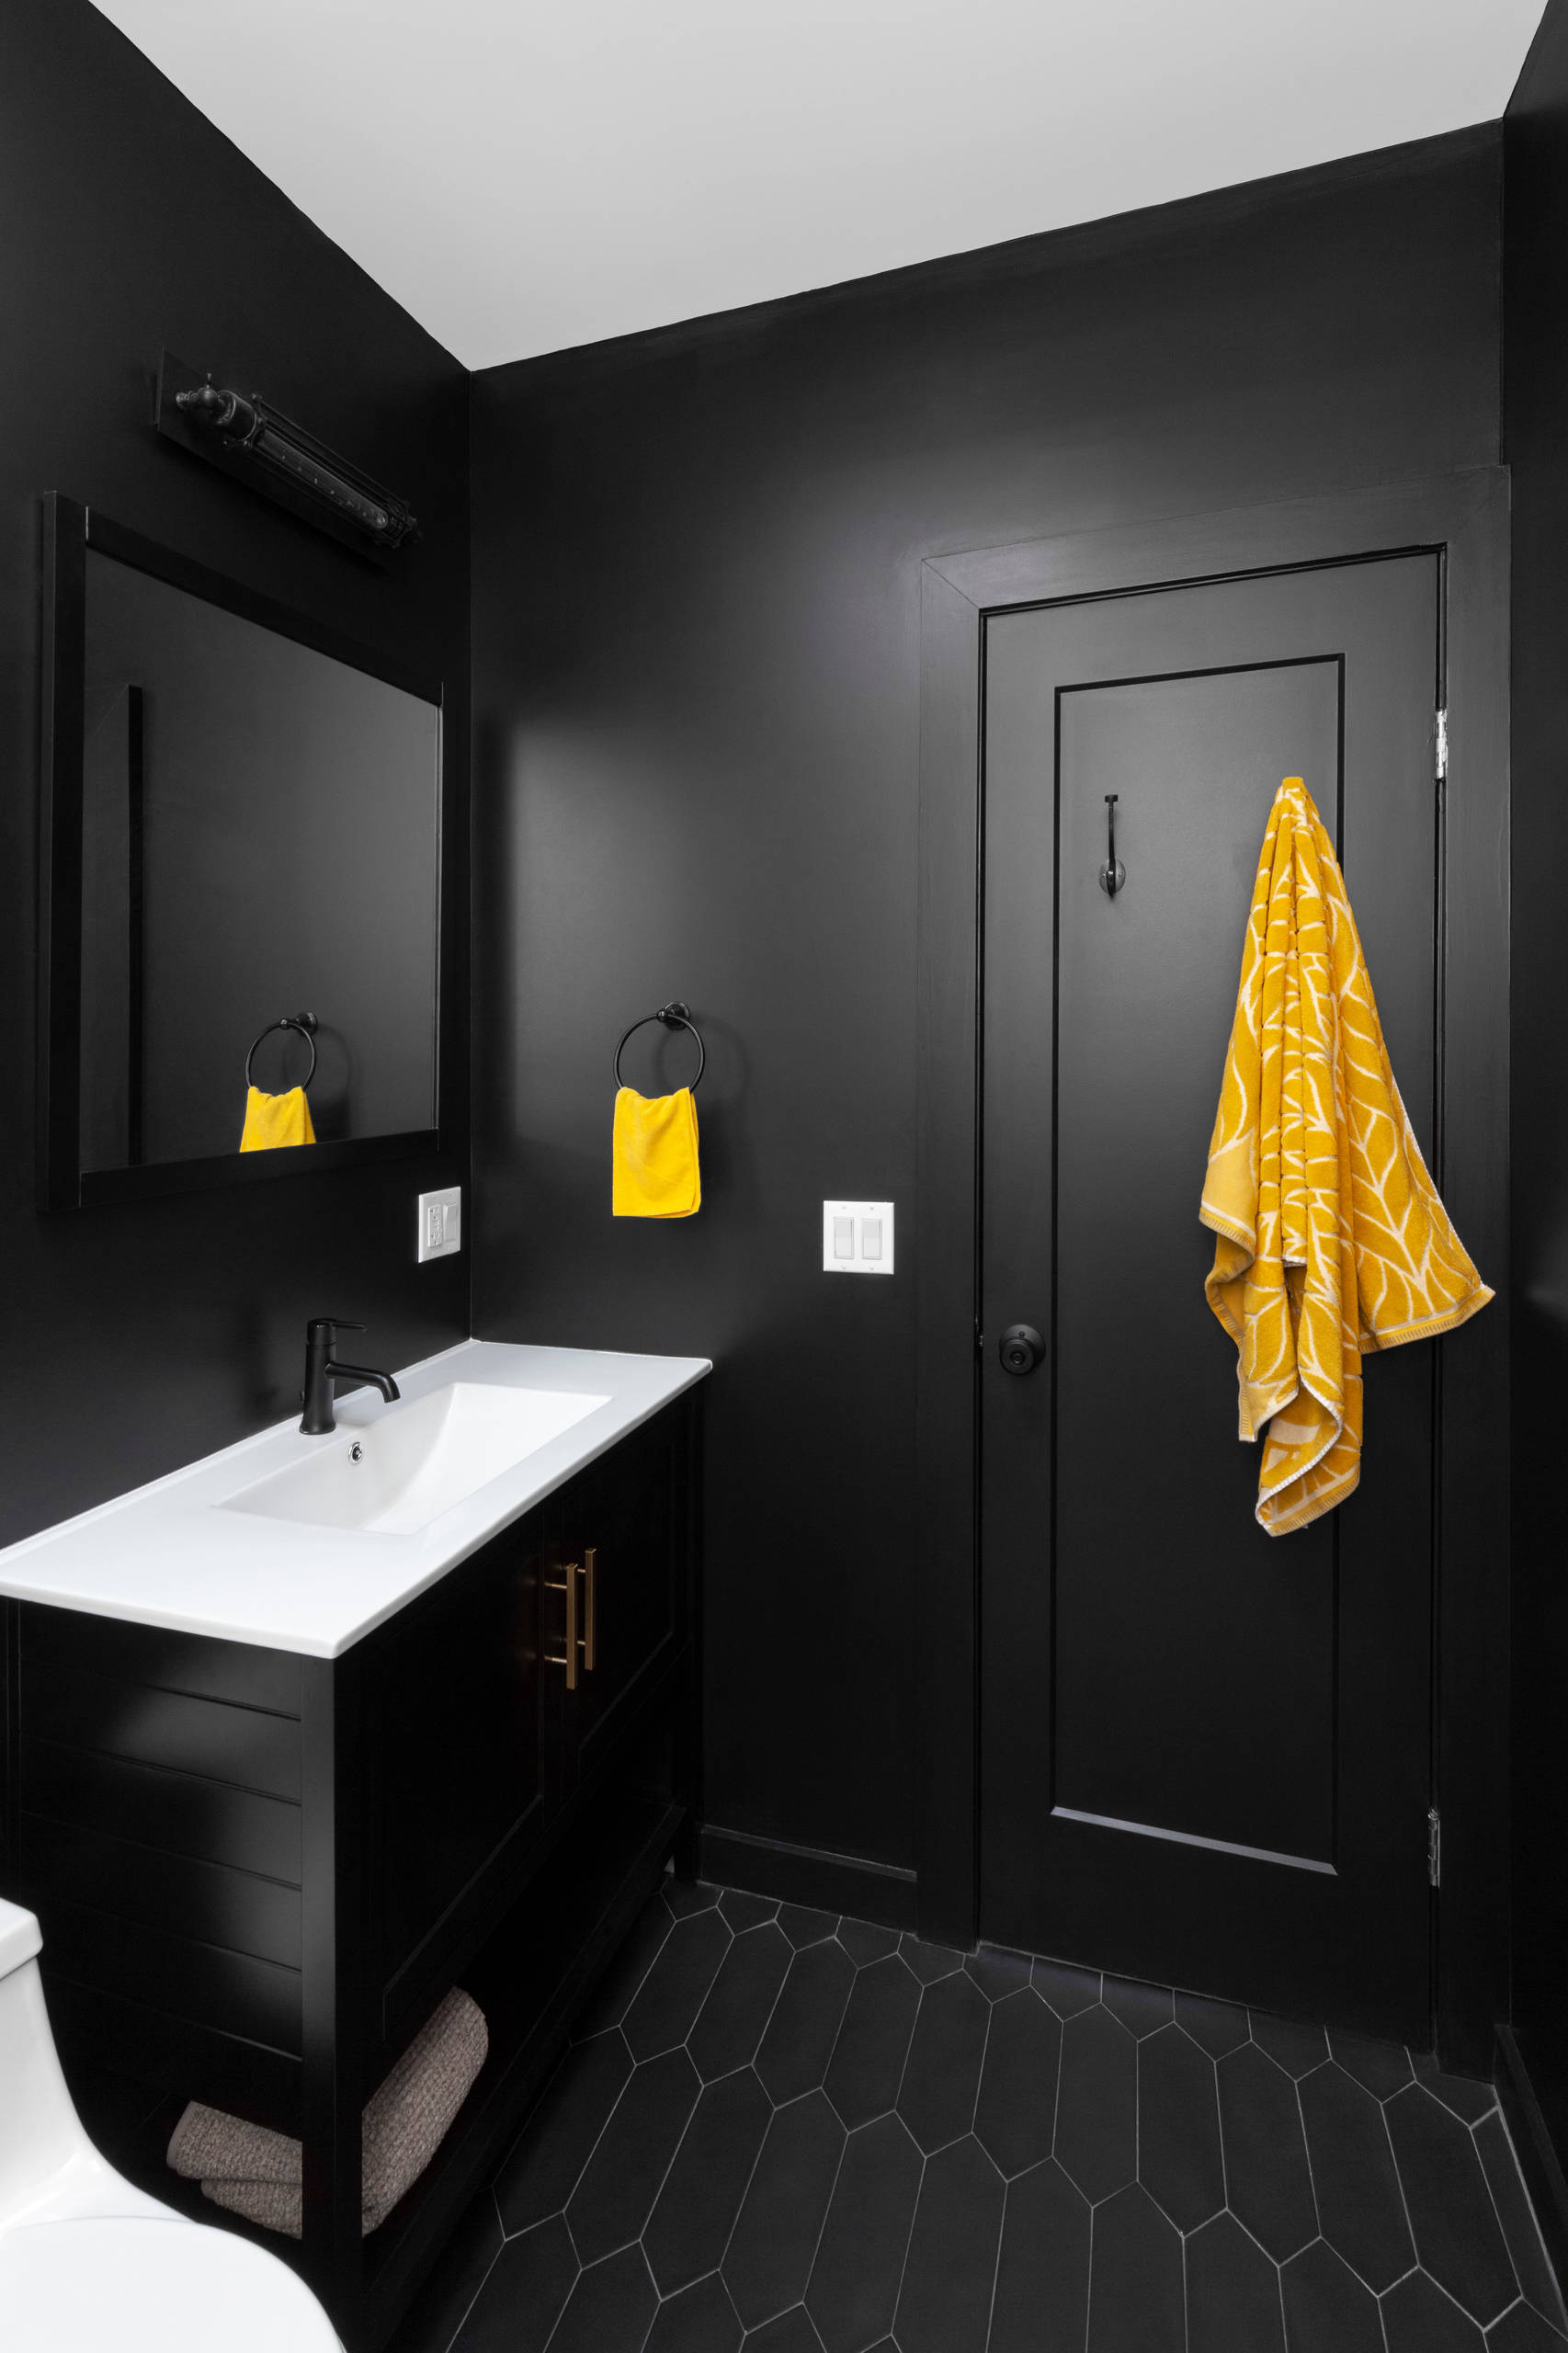 https://st.hzcdn.com/simgs/pictures/bathrooms/black-modern-bathroom-ward-5-design-img~55a1f2be0c7f1a20_14-9425-1-bf0693f.jpg